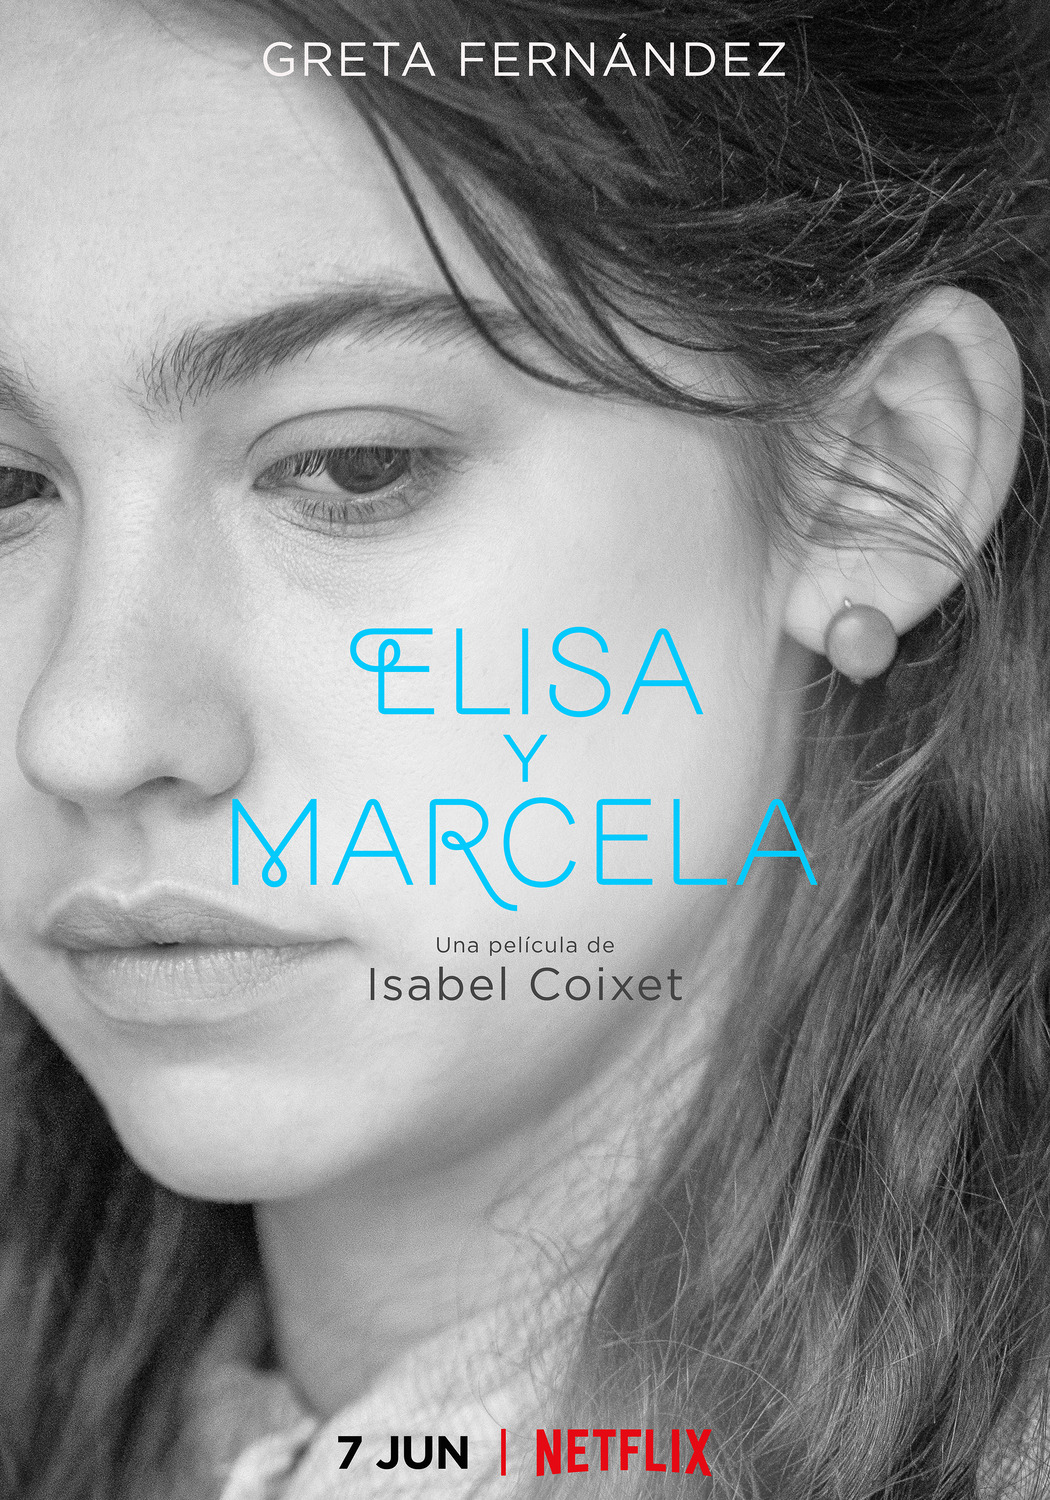 Extra Large TV Poster Image for Elisa y Marcela (#2 of 3)